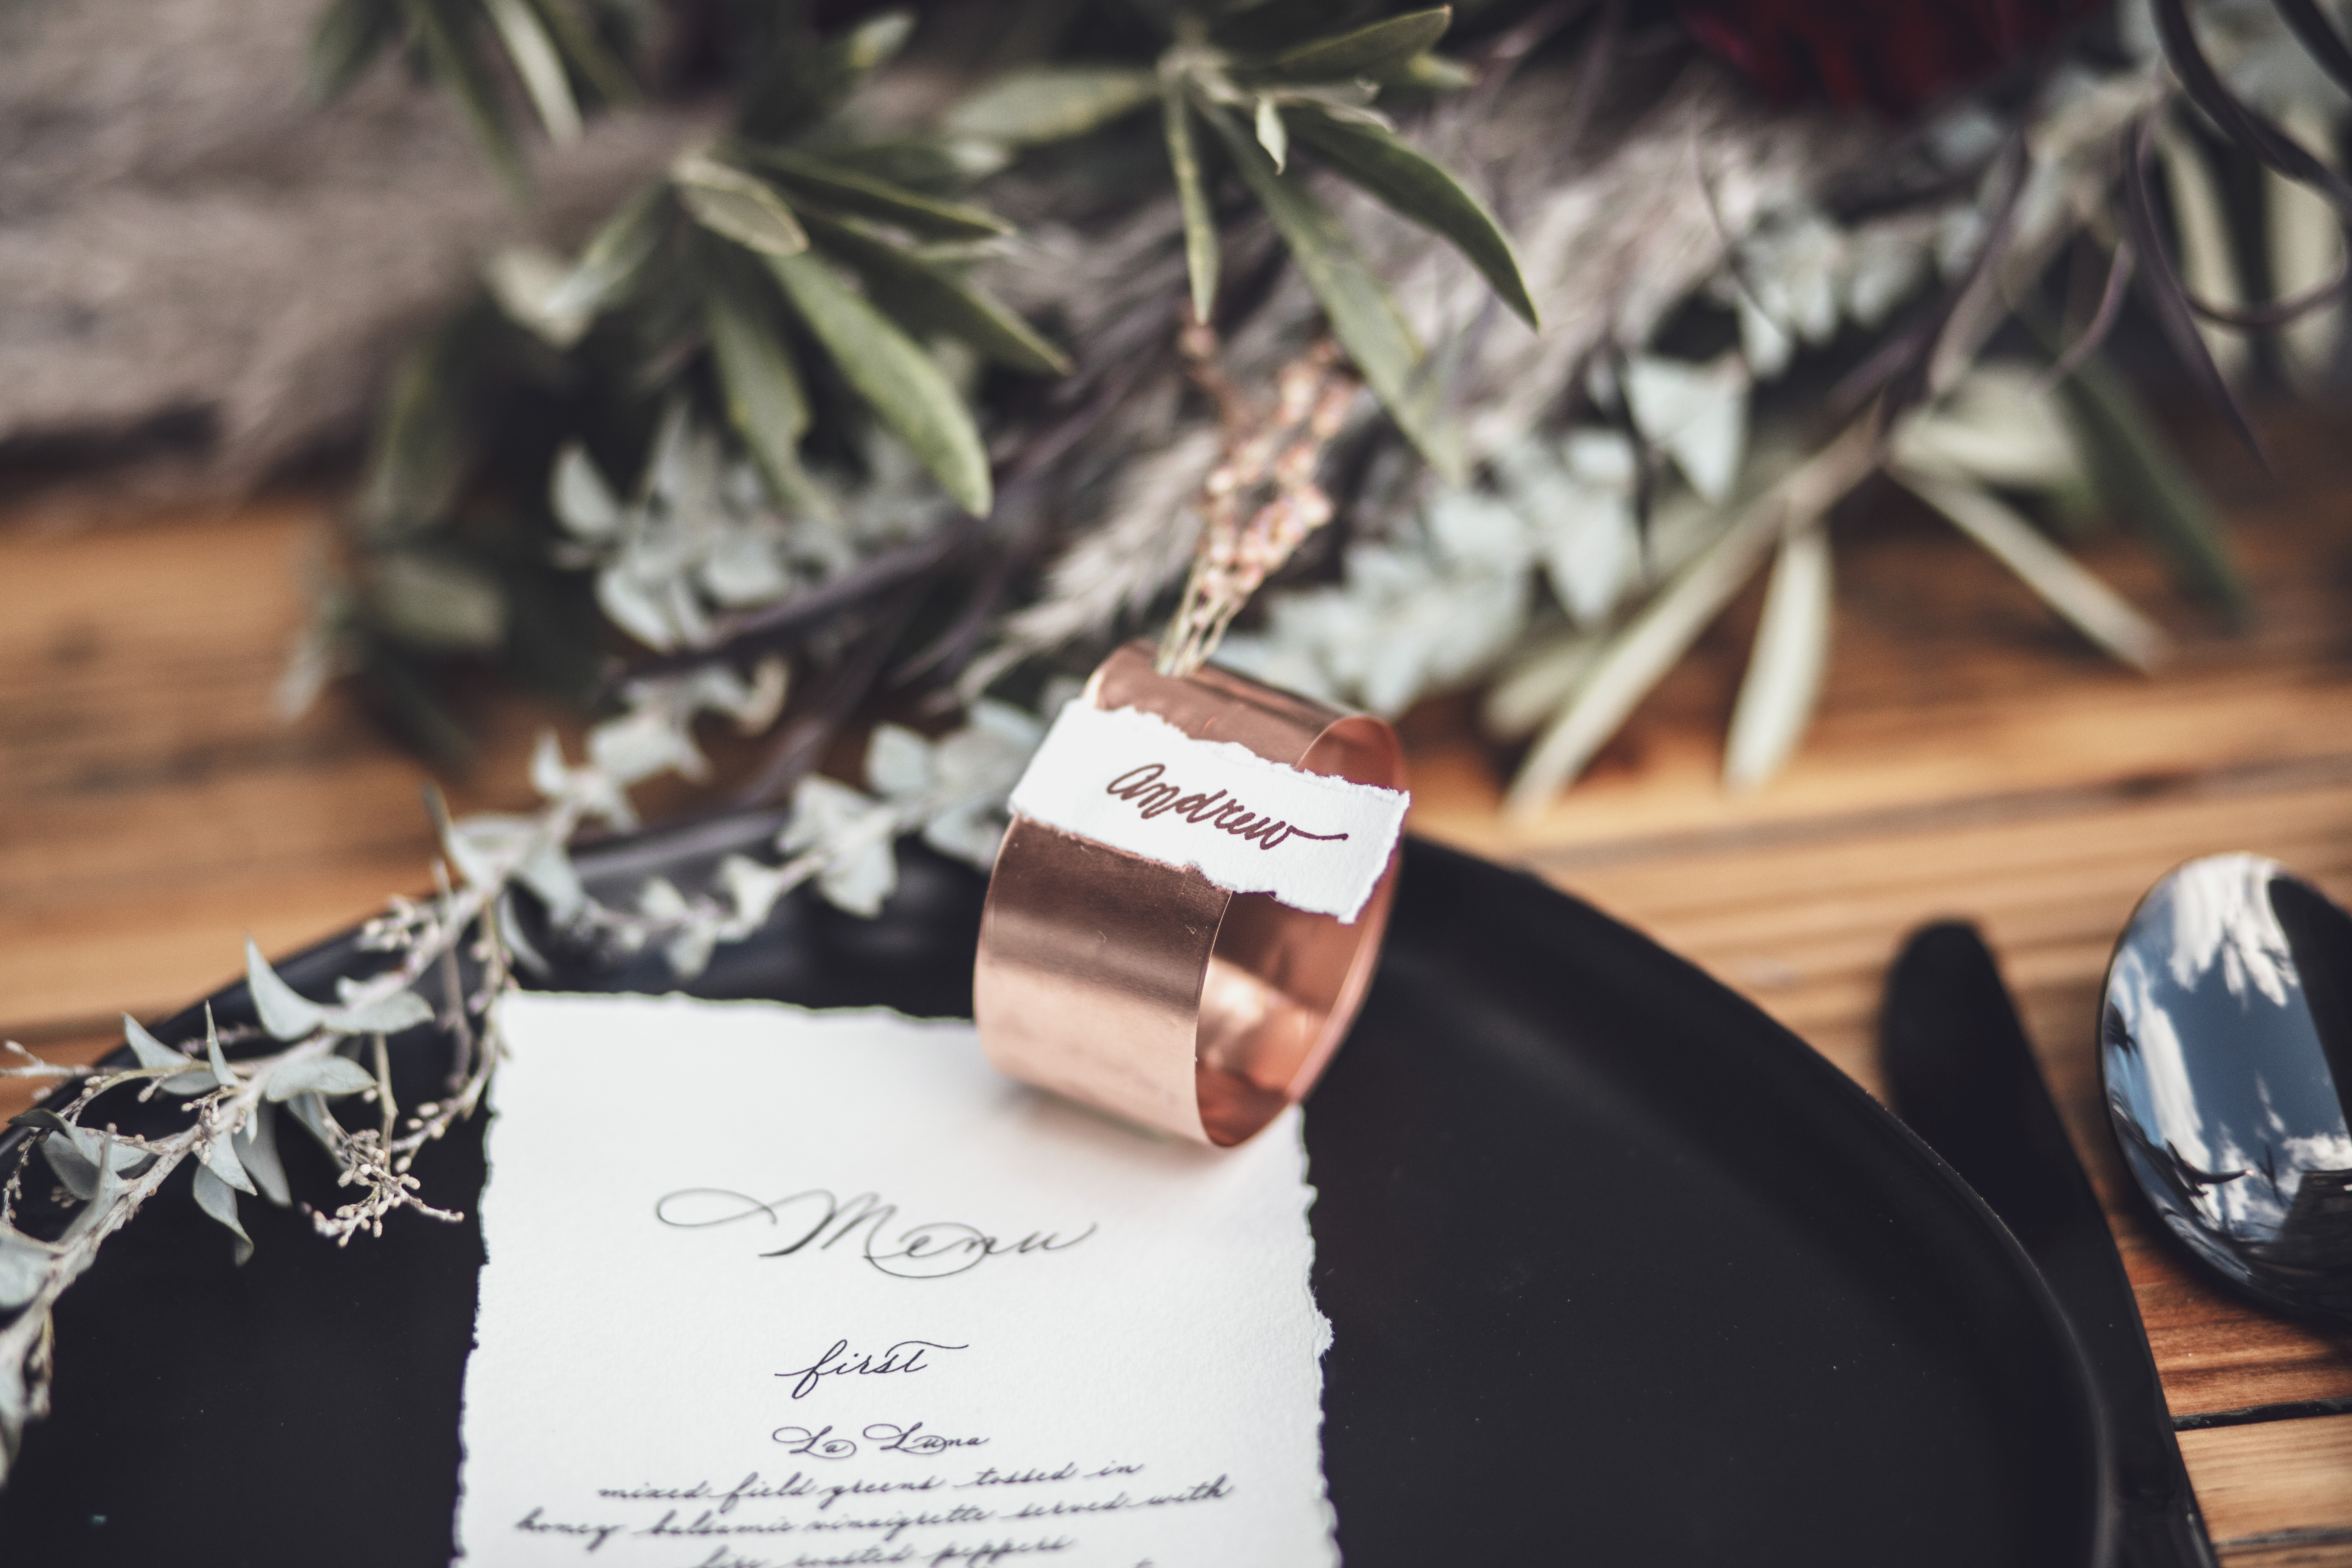 2019's Insta-Worthy Wedding Trends | Black china and black flatware | Verve Event Co. #upstatenyweddingplanner #weddingtrends #fingerlakeswedding